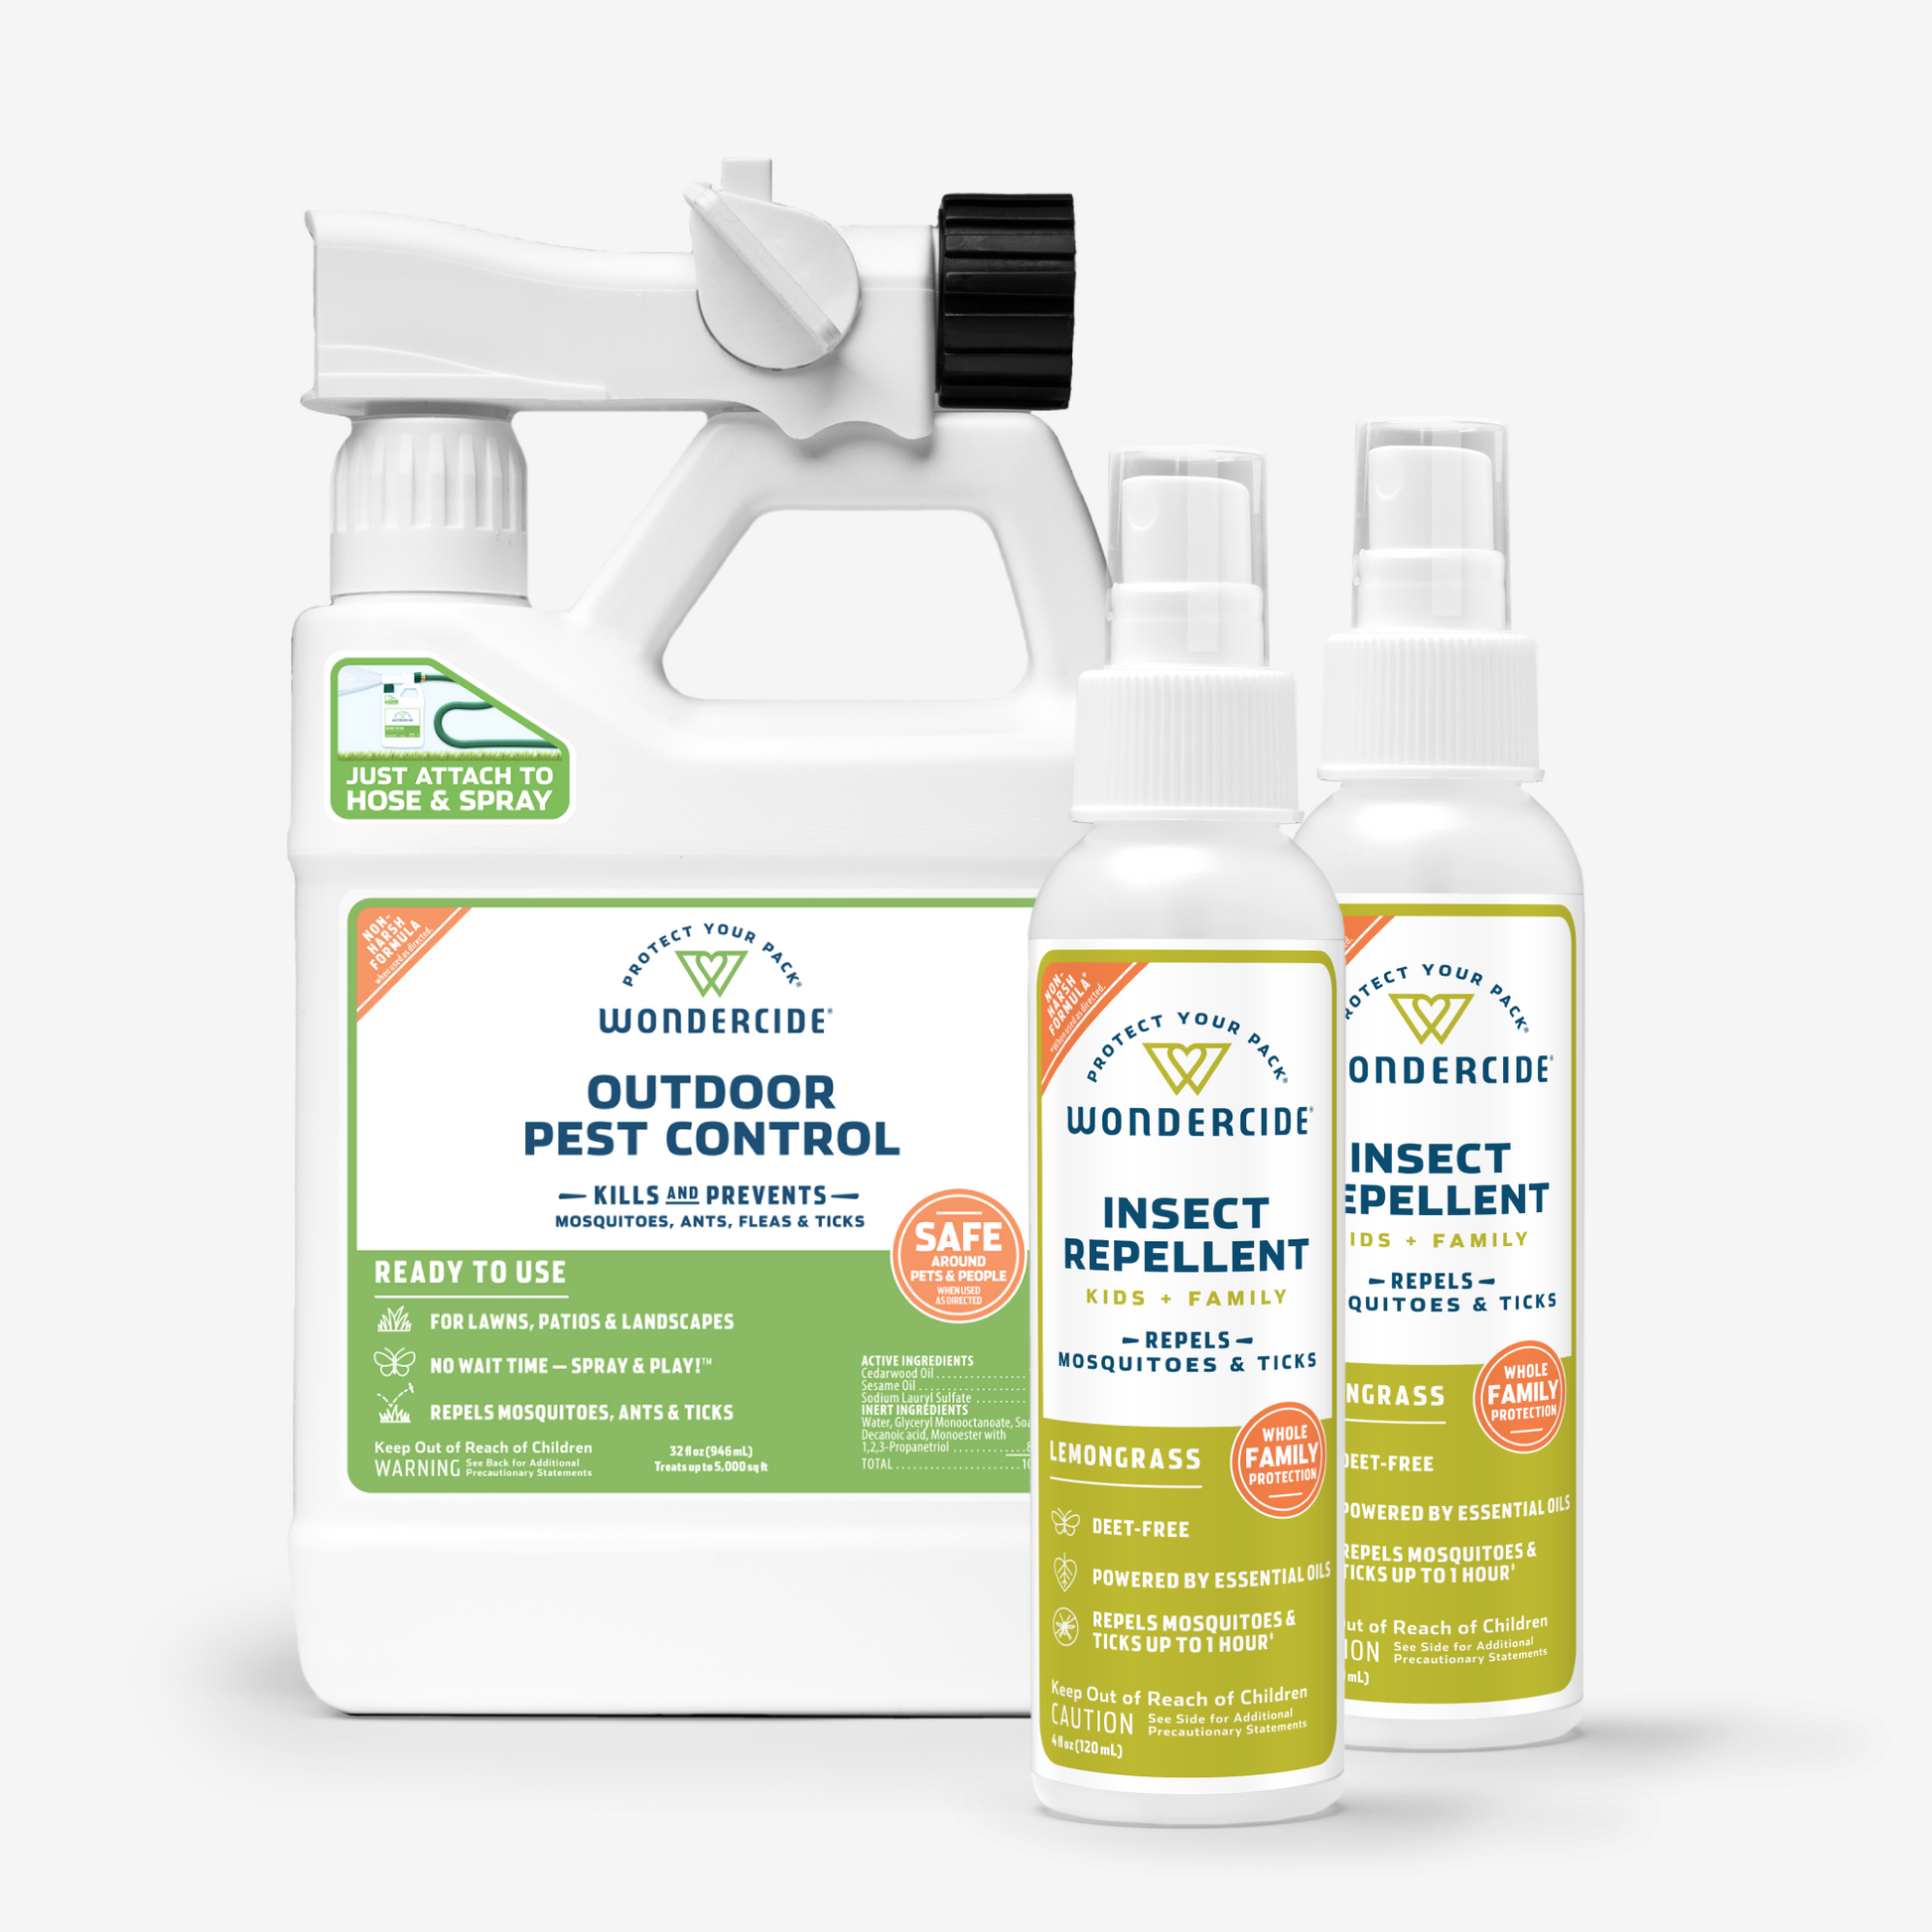 Lemongrass Insect Repellent for Kids + Family